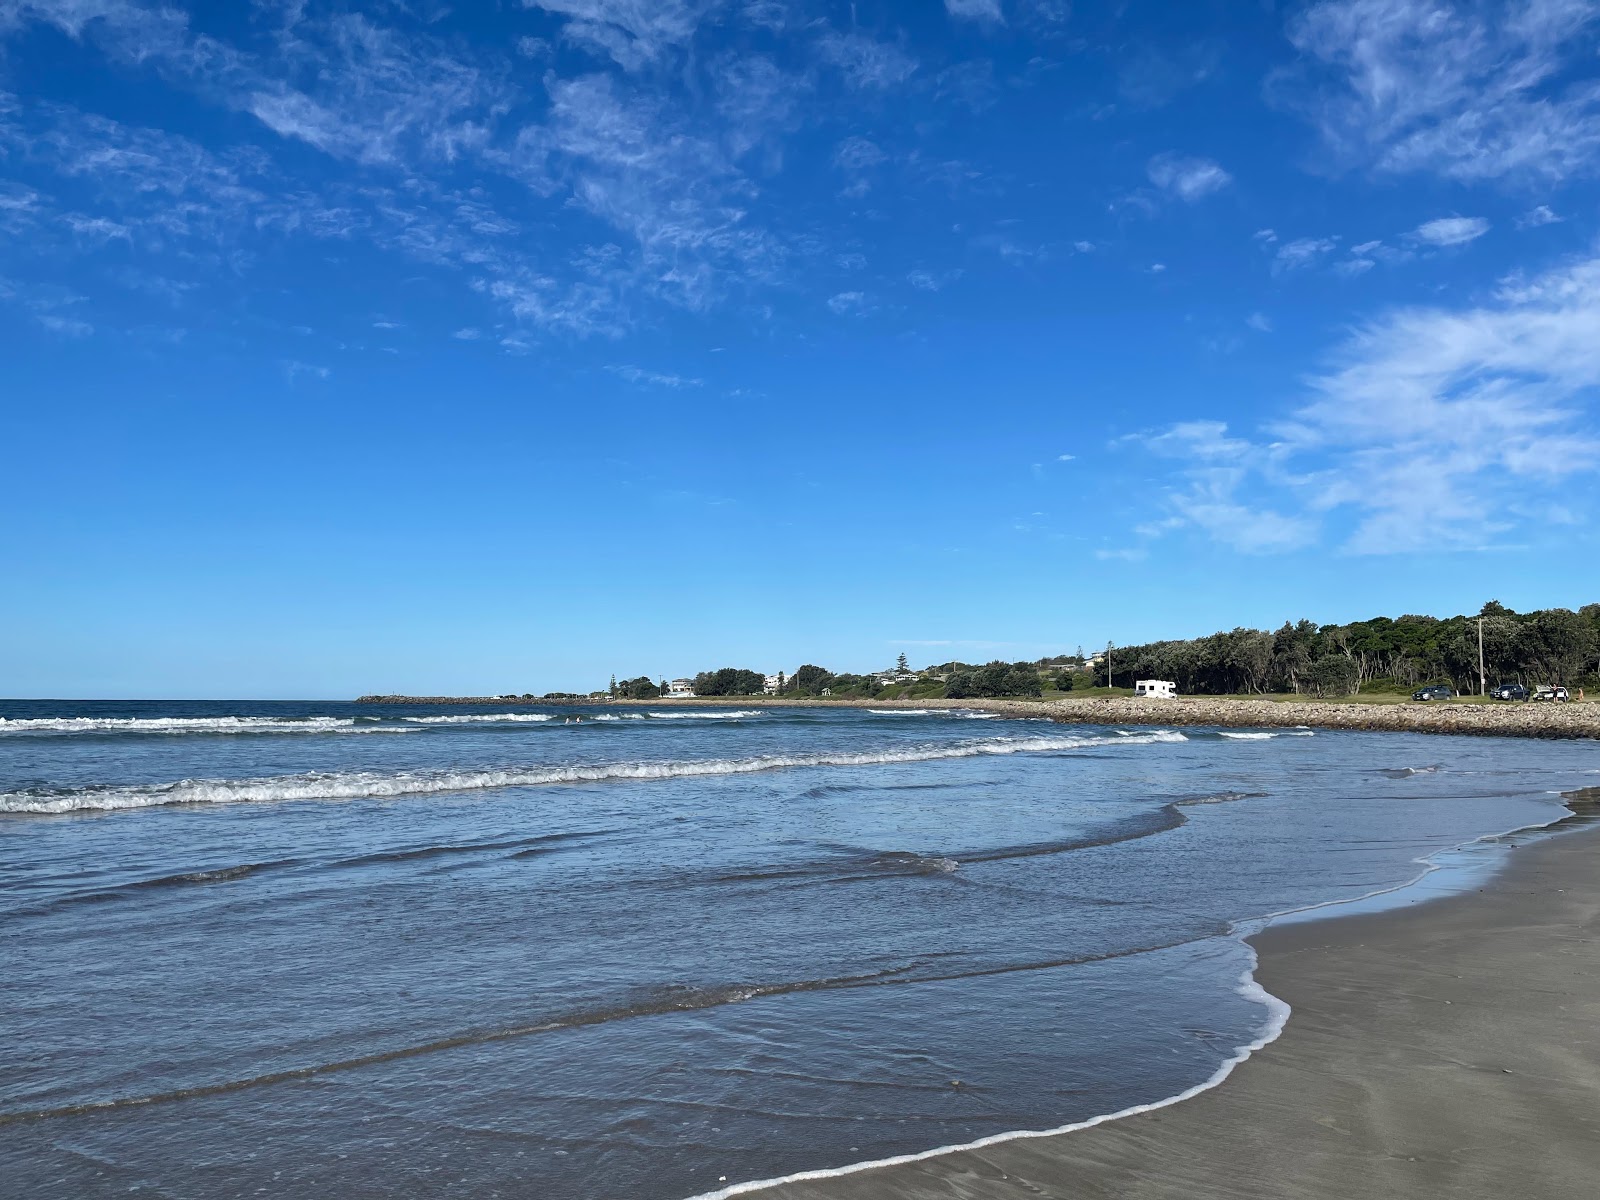 Foto de Crowdy Bay Beach - lugar popular entre os apreciadores de relaxamento